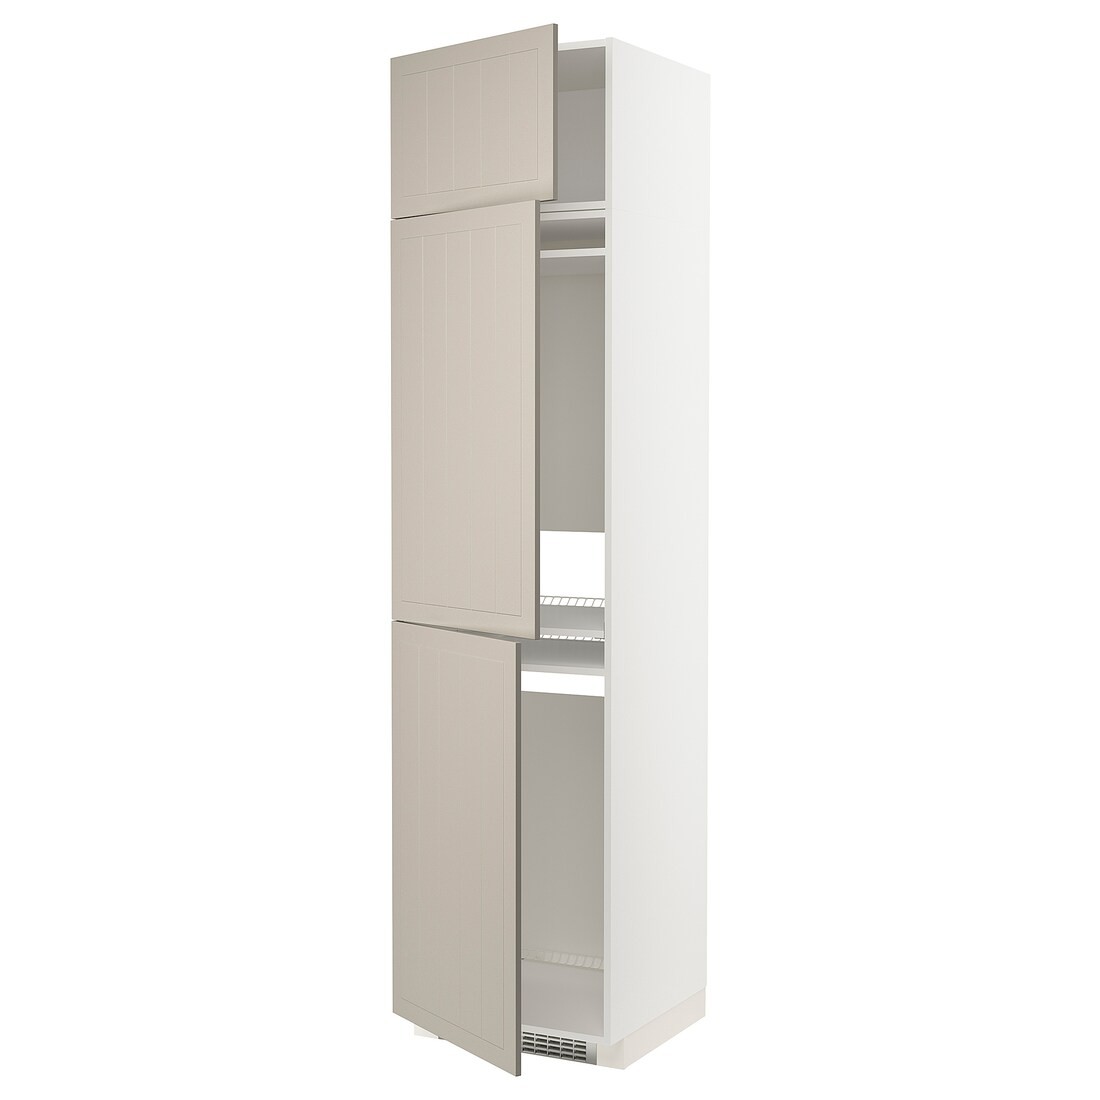 IKEA METOD МЕТОД Высокий шкаф для холодильника / морозильника / 3 дверцы, белый / Stensund бежевый, 60x60x240 см 19466046 | 194.660.46